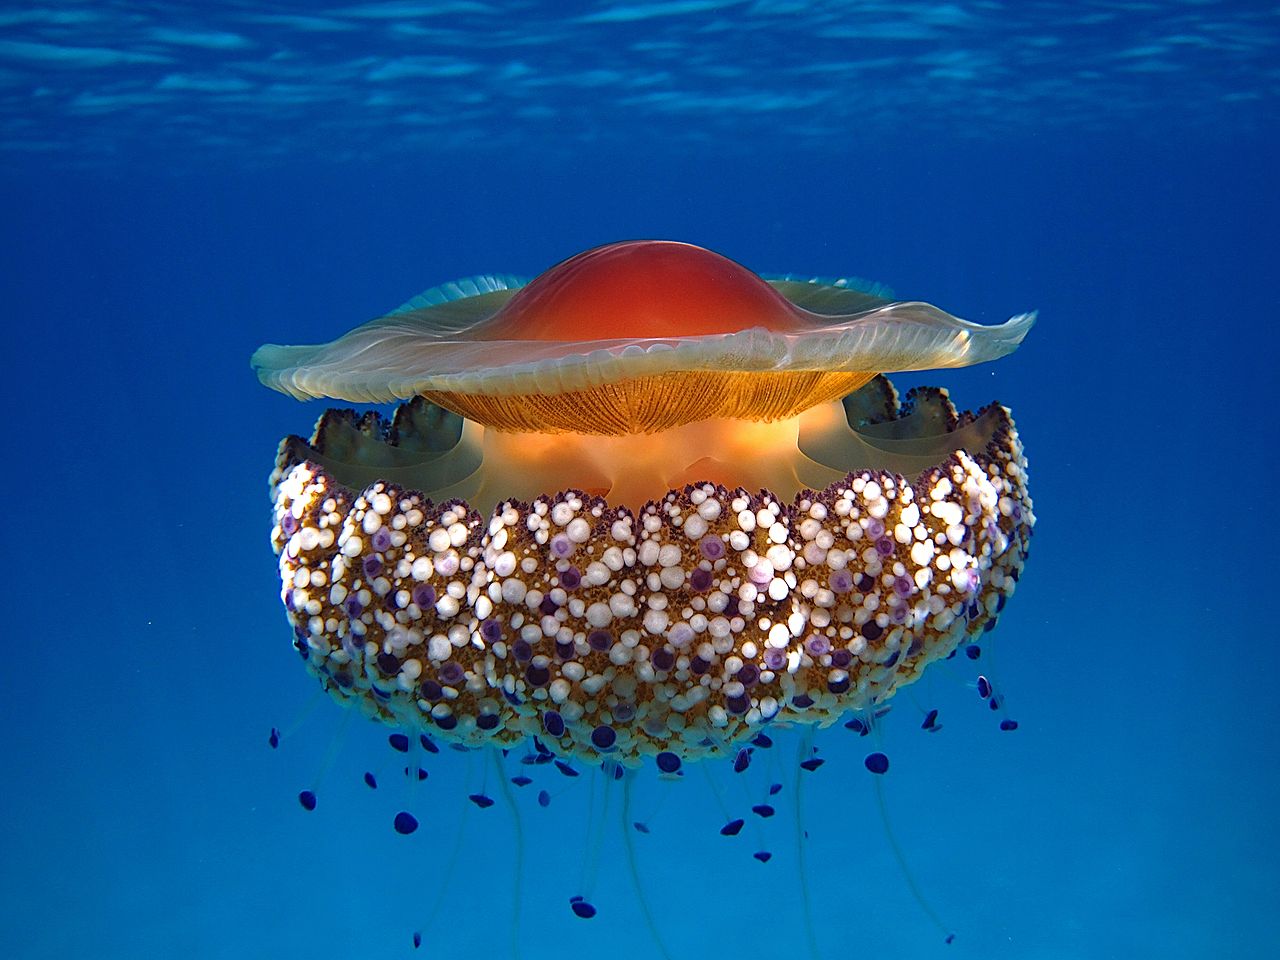 Fried-Egg Jellyfish